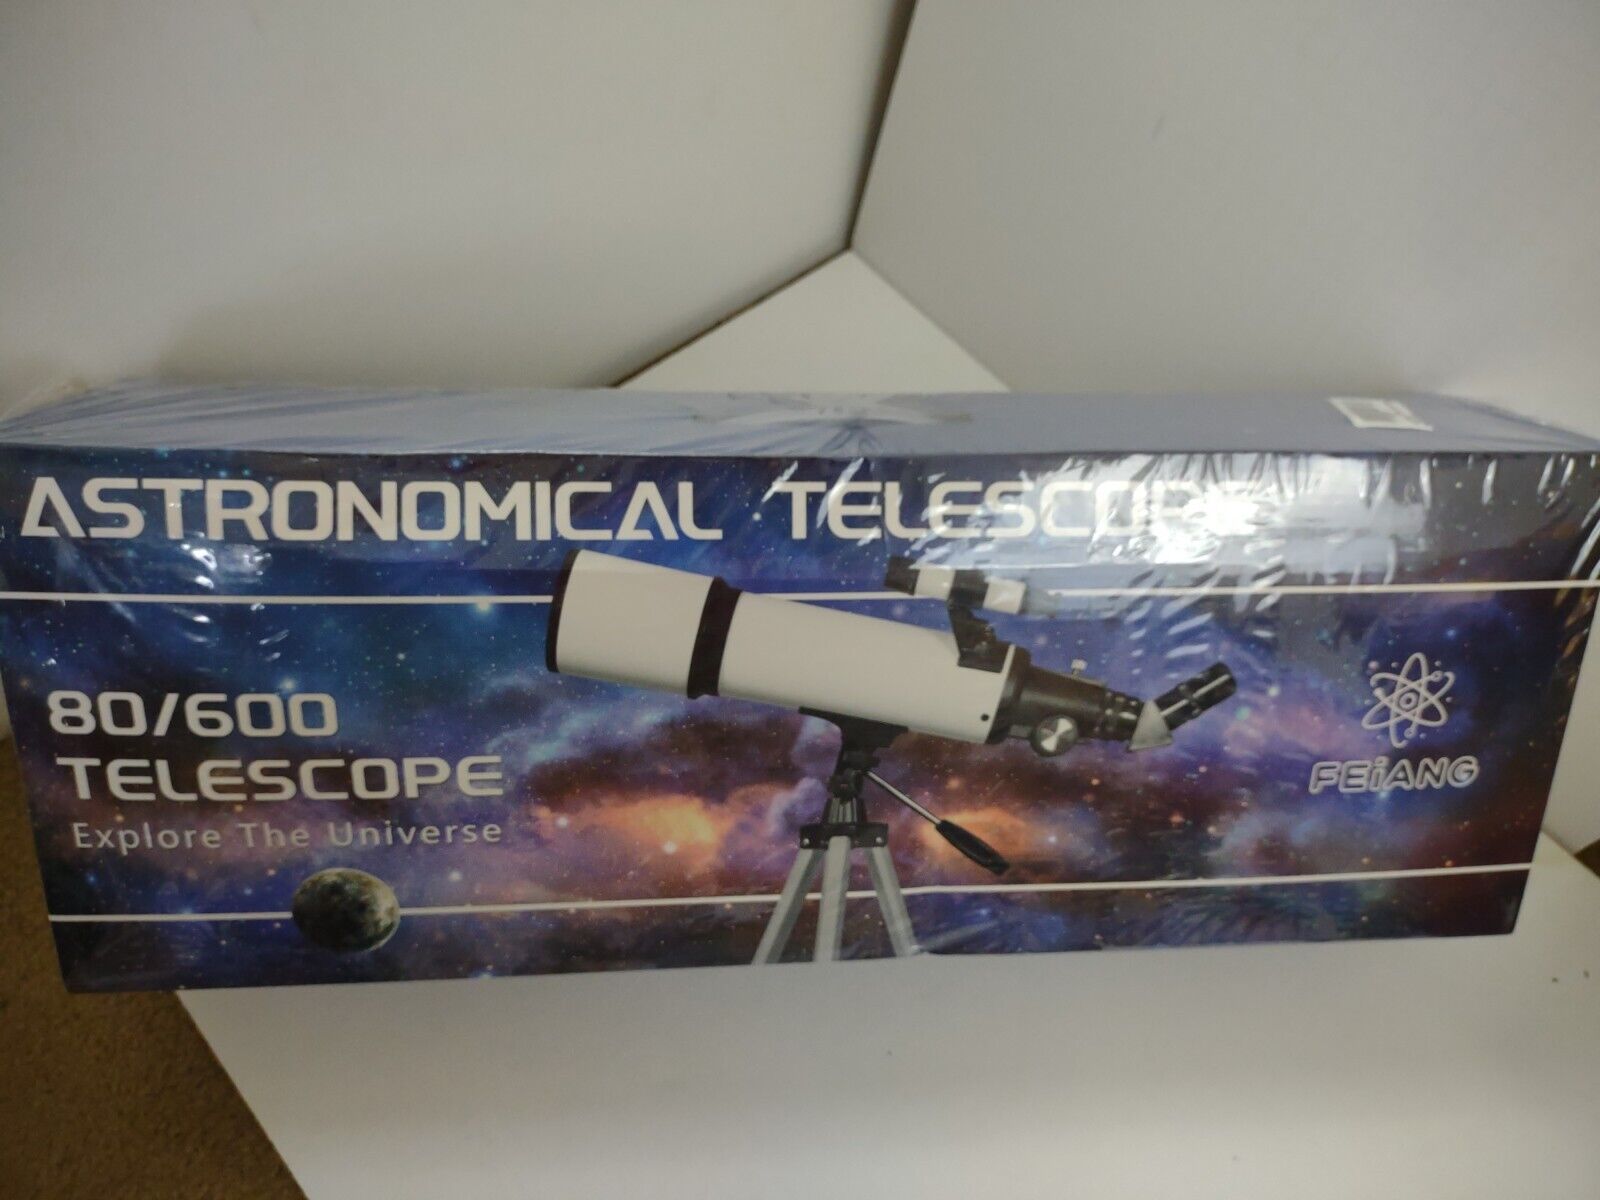 Feiang 80/600 Telescope - New, Sealed